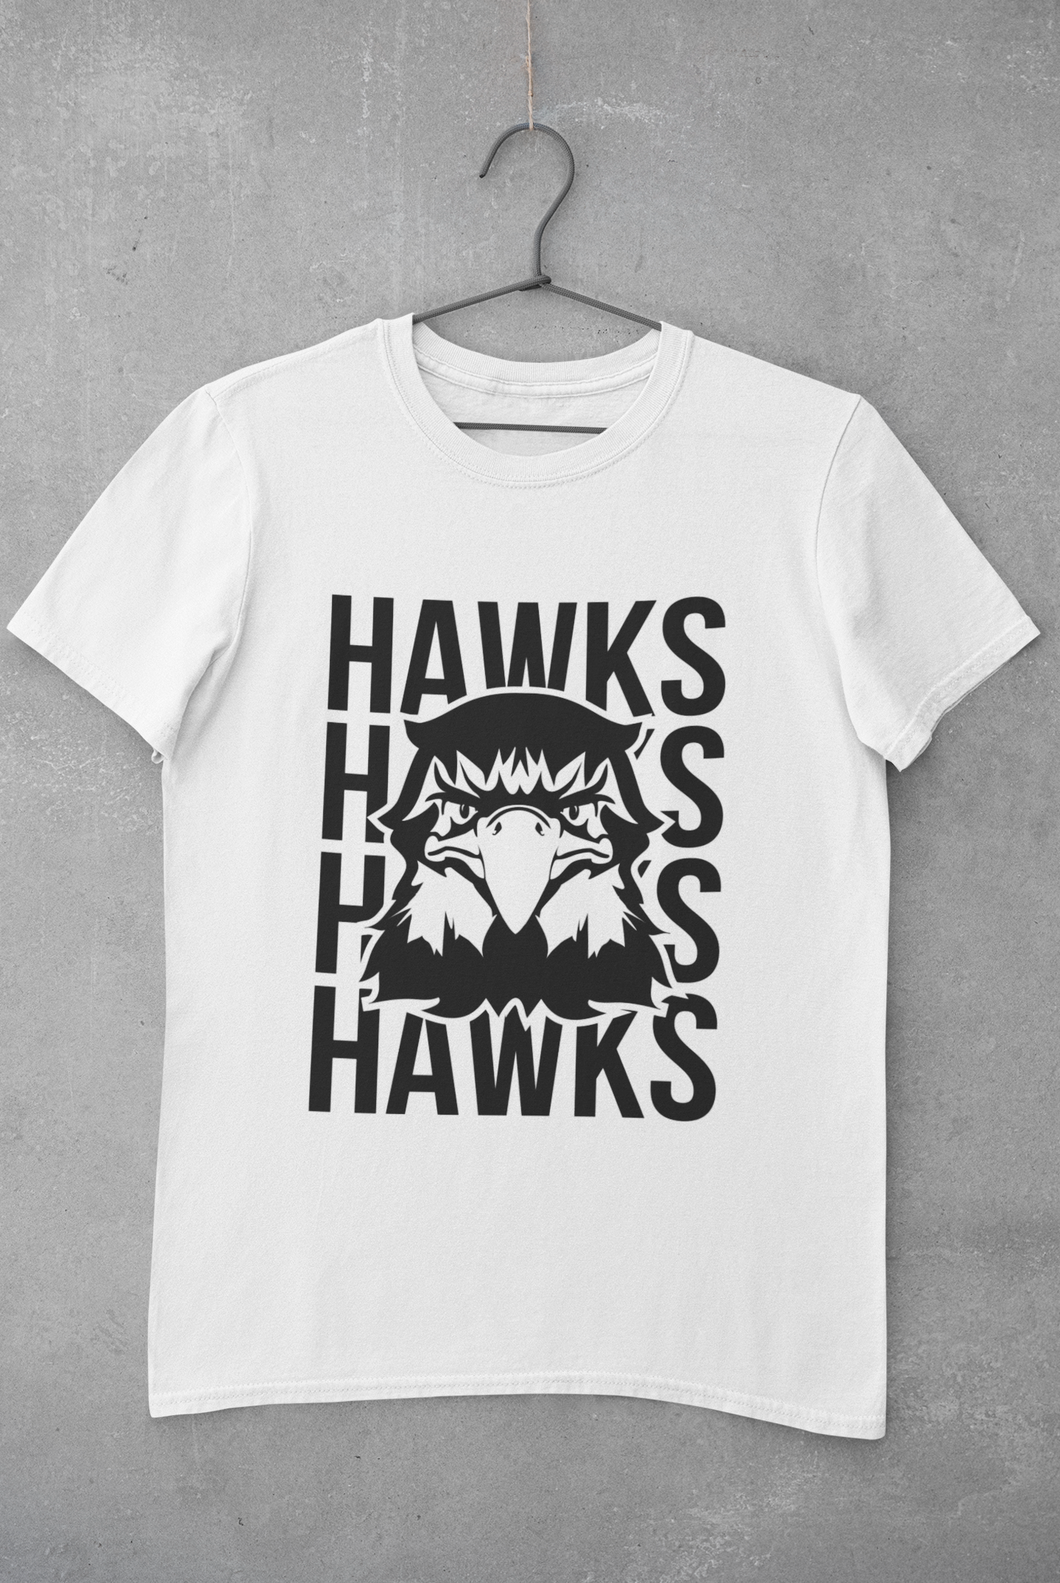 Hawks Mascot Tee